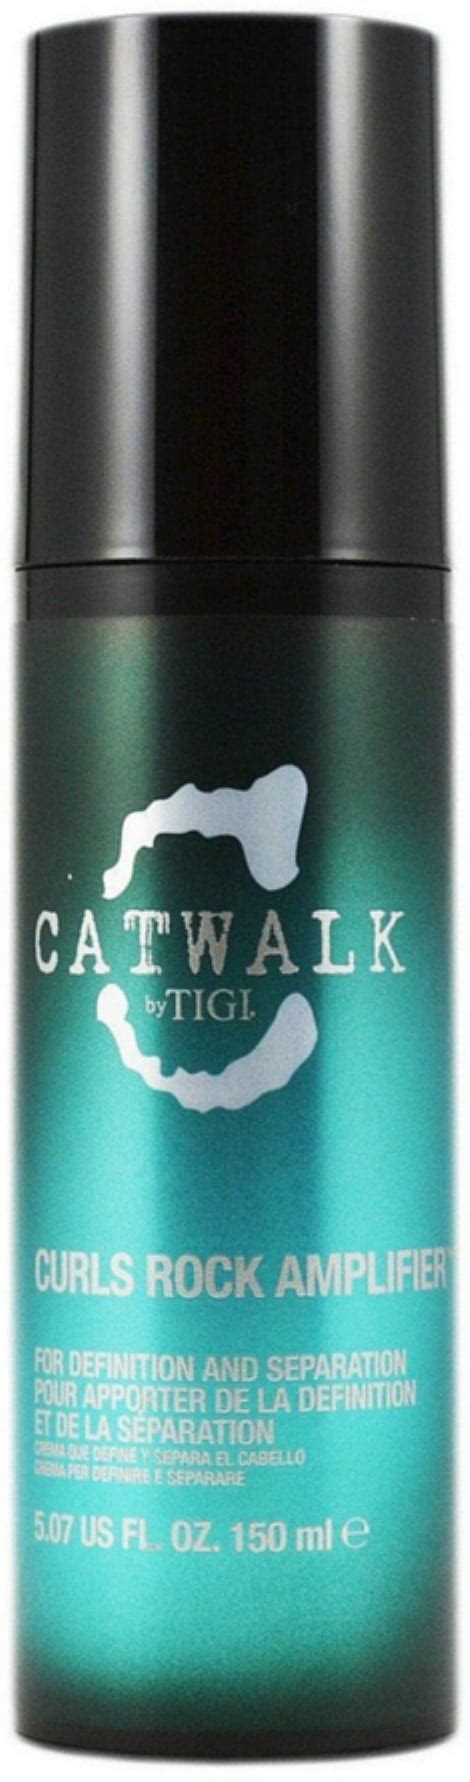 Buy Tigi Catwalk Curls Rock Amplifier Oz Online At Lowest Price